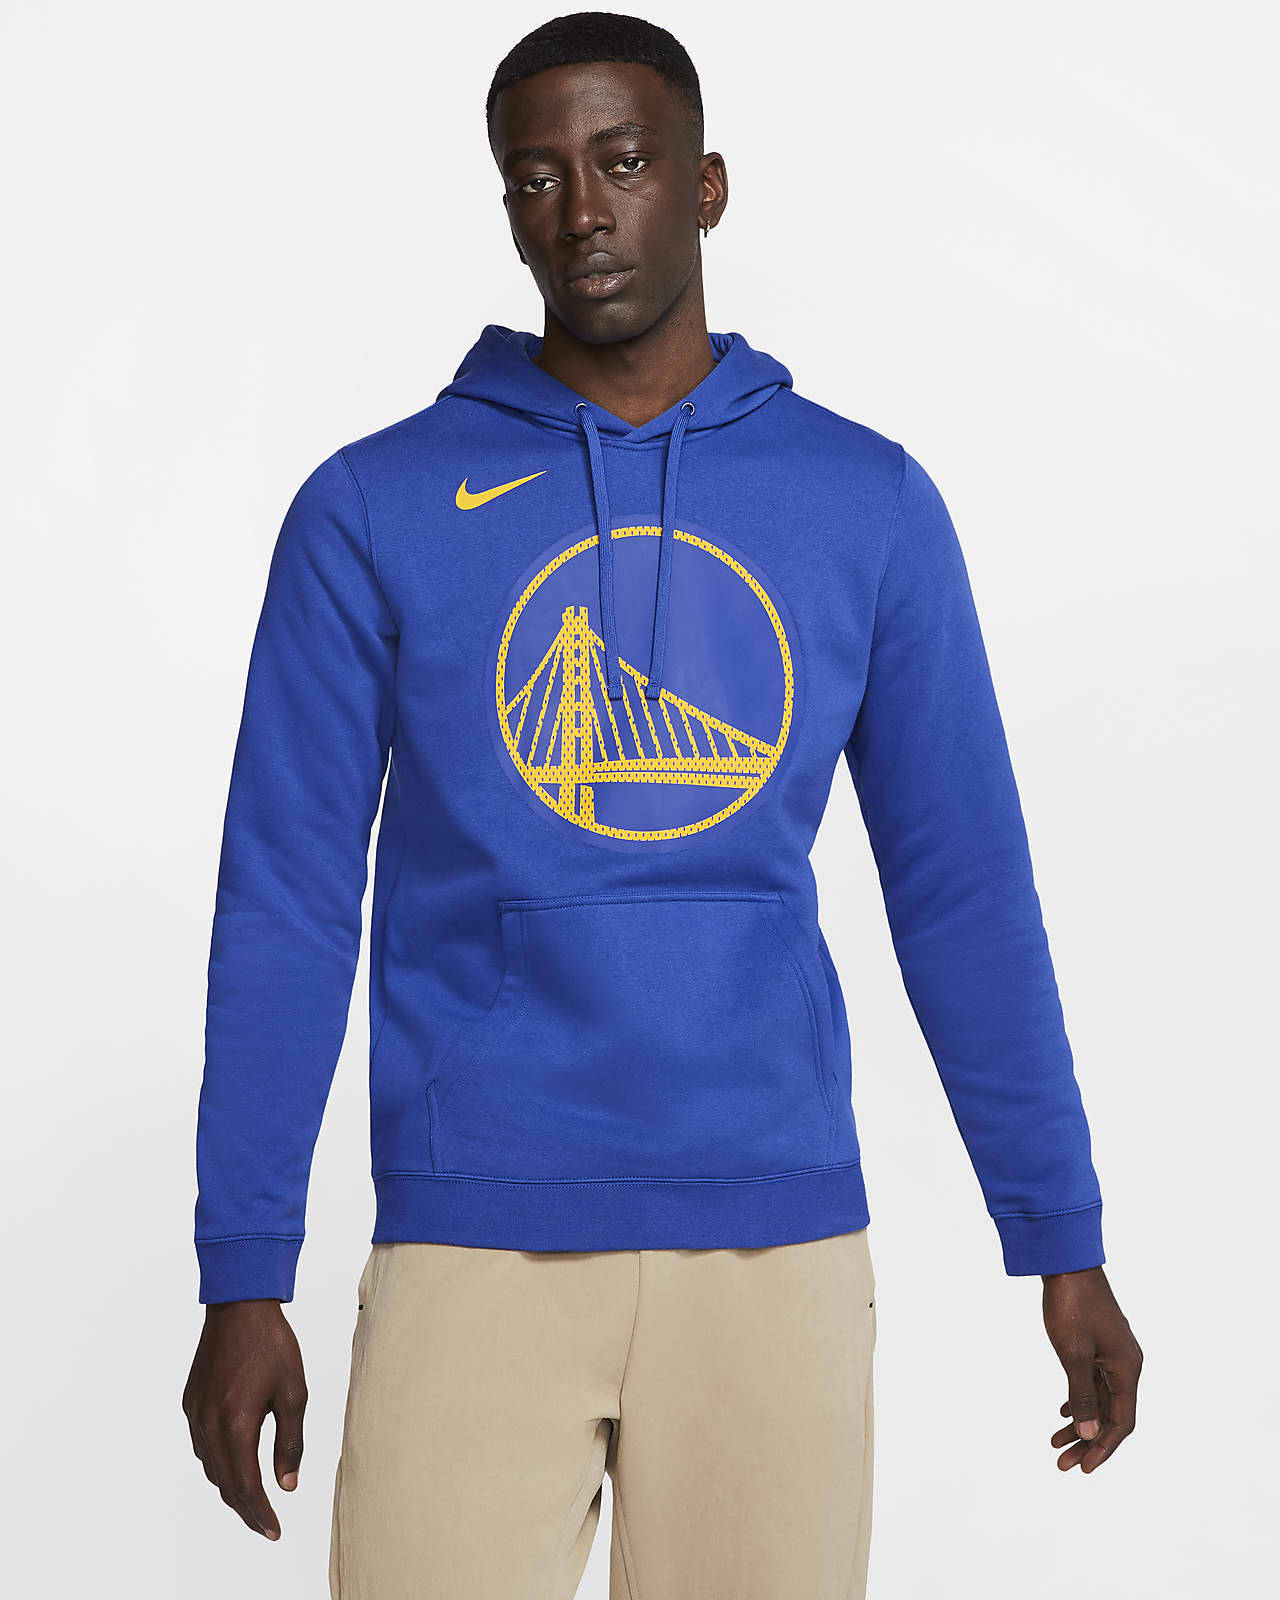 Sudadera con capucha de la NBA Nike para hombre Golden State Warriors Logo.  Nike.com